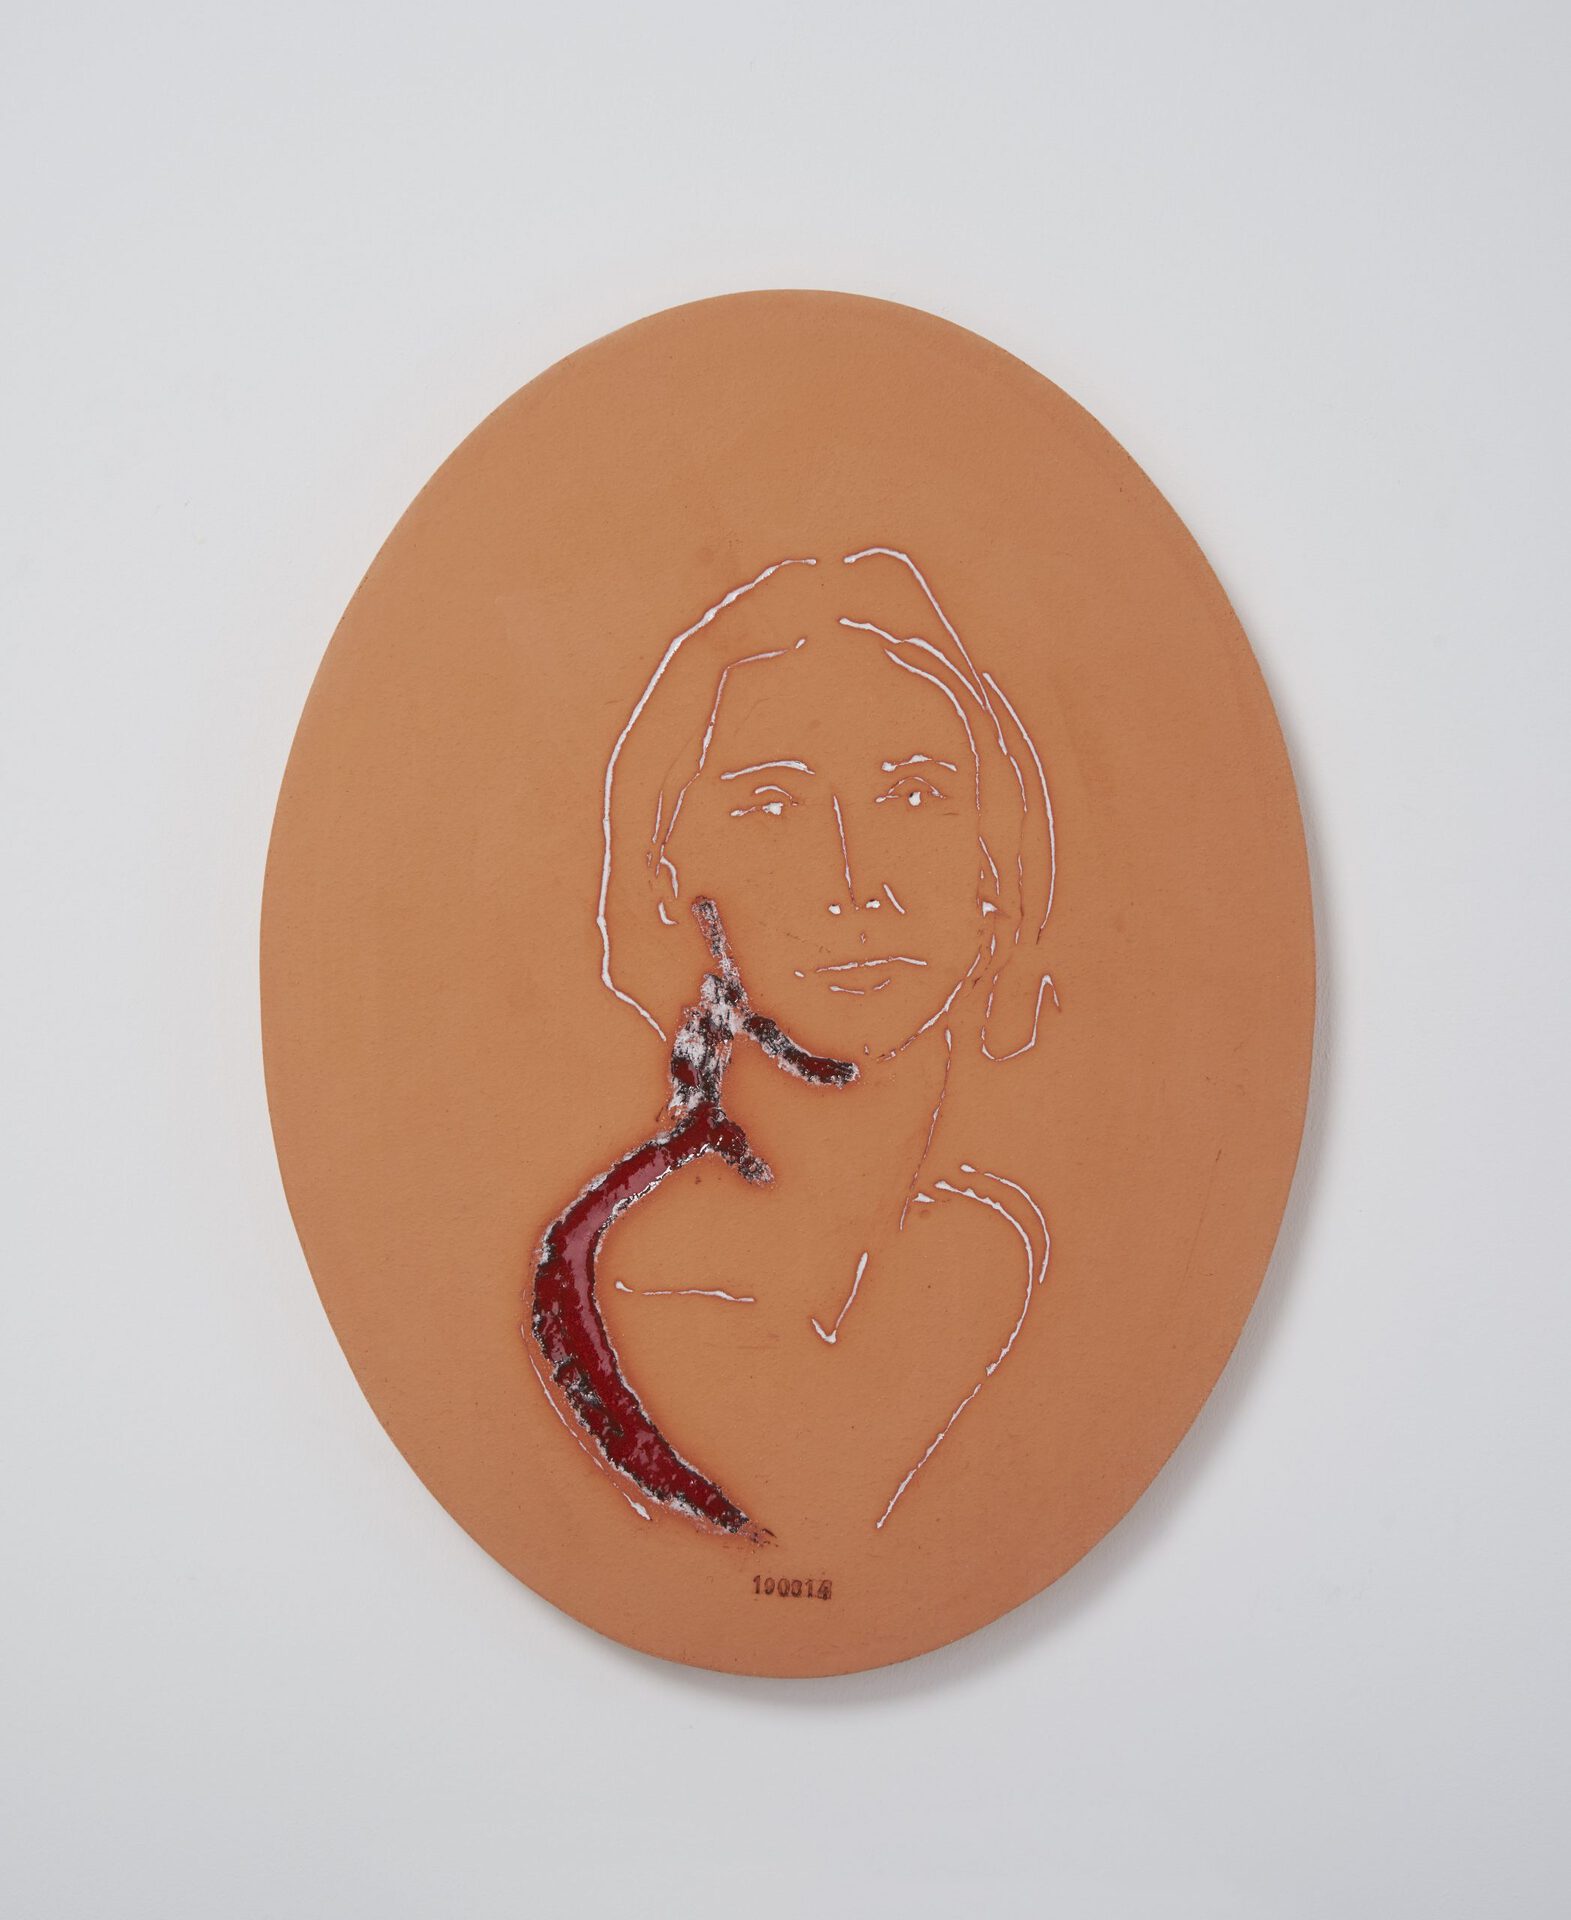 Thomas Schütte, Anna, 2014, glased ceramic, 72x55x4 cm